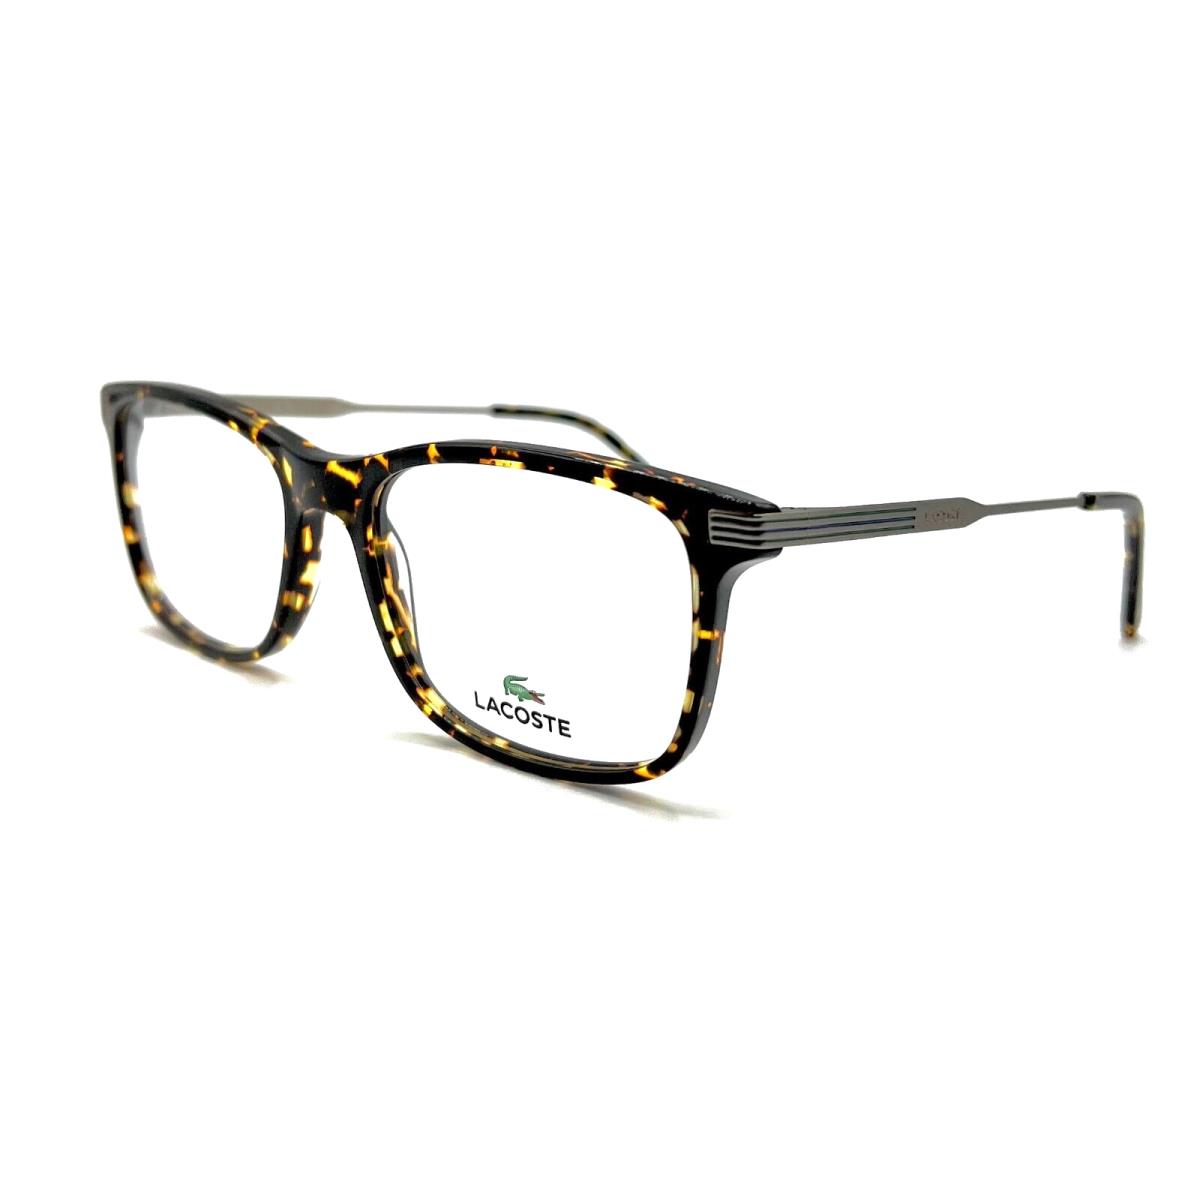 Lacoste - L2888 240 55/18/145 - Dark Havana Tortoise - Eyeglasses - Frame: Brown